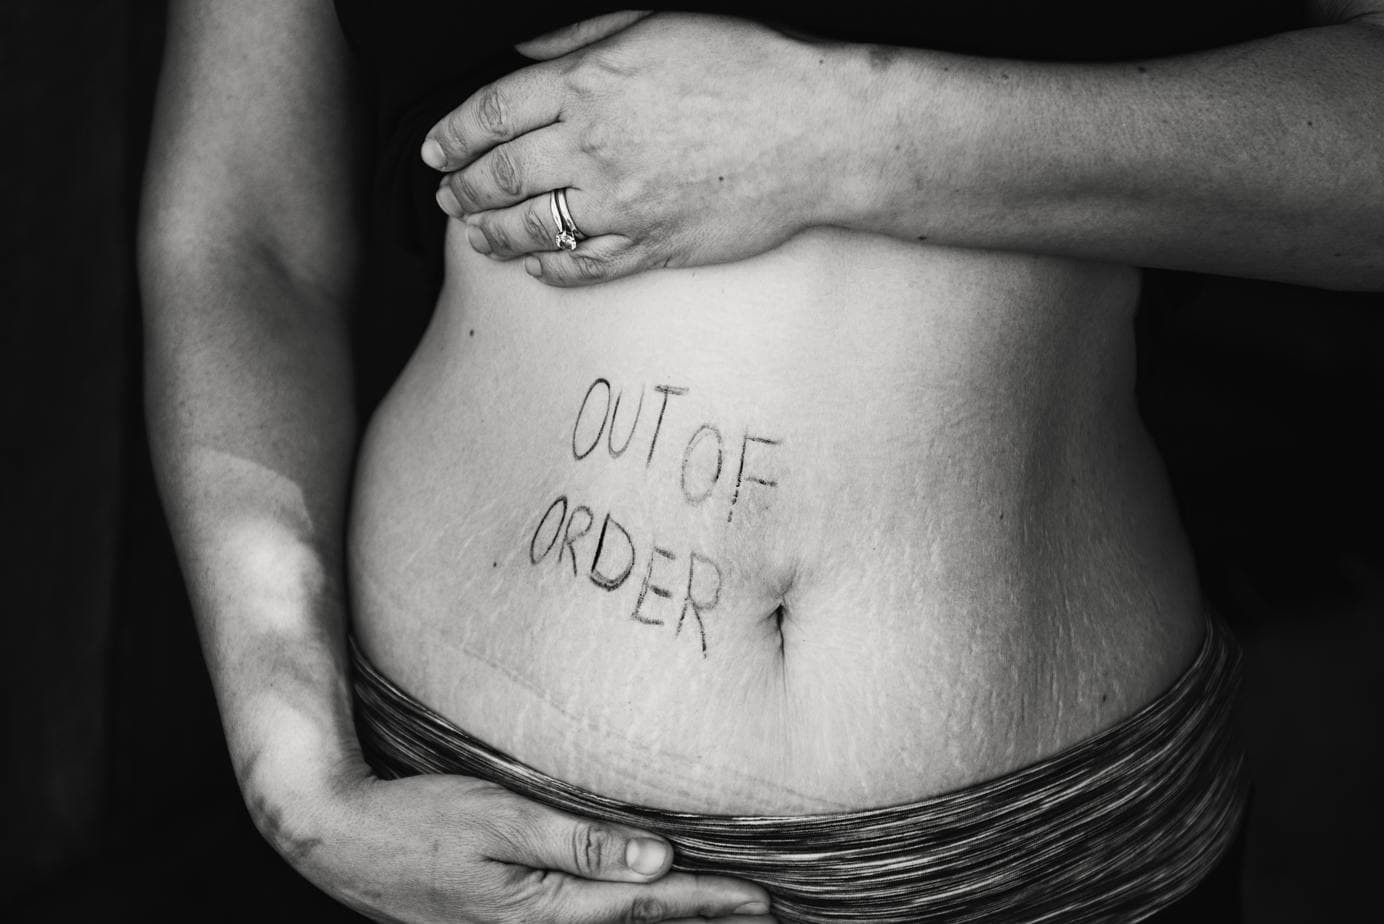 Zwillingsratgeber schwangerschaftsstreife-schwangerschaft-body-shaming Jetzt reicht’s! – Schluss mit Body-Shaming während der Schwangerschaft und nach der Geburt 